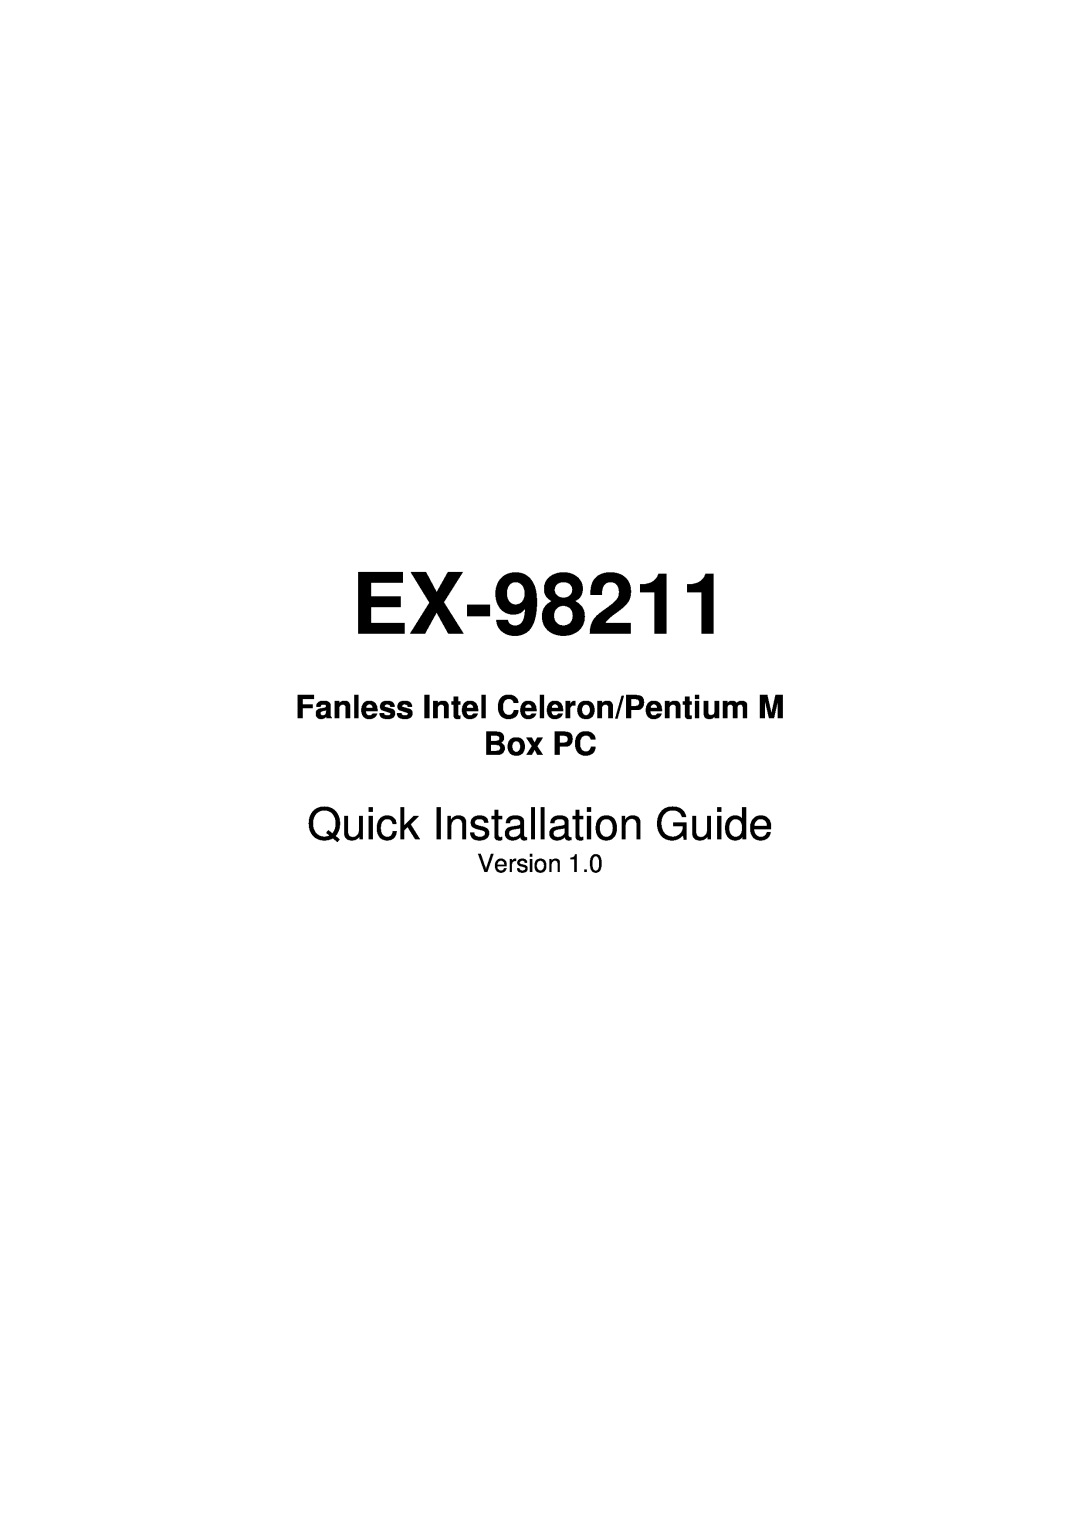 Intel EX-98211 FANLESS CELERON manual Quick Installation Guide, Fanless Intel Celeron/Pentium M Box PC, Version 